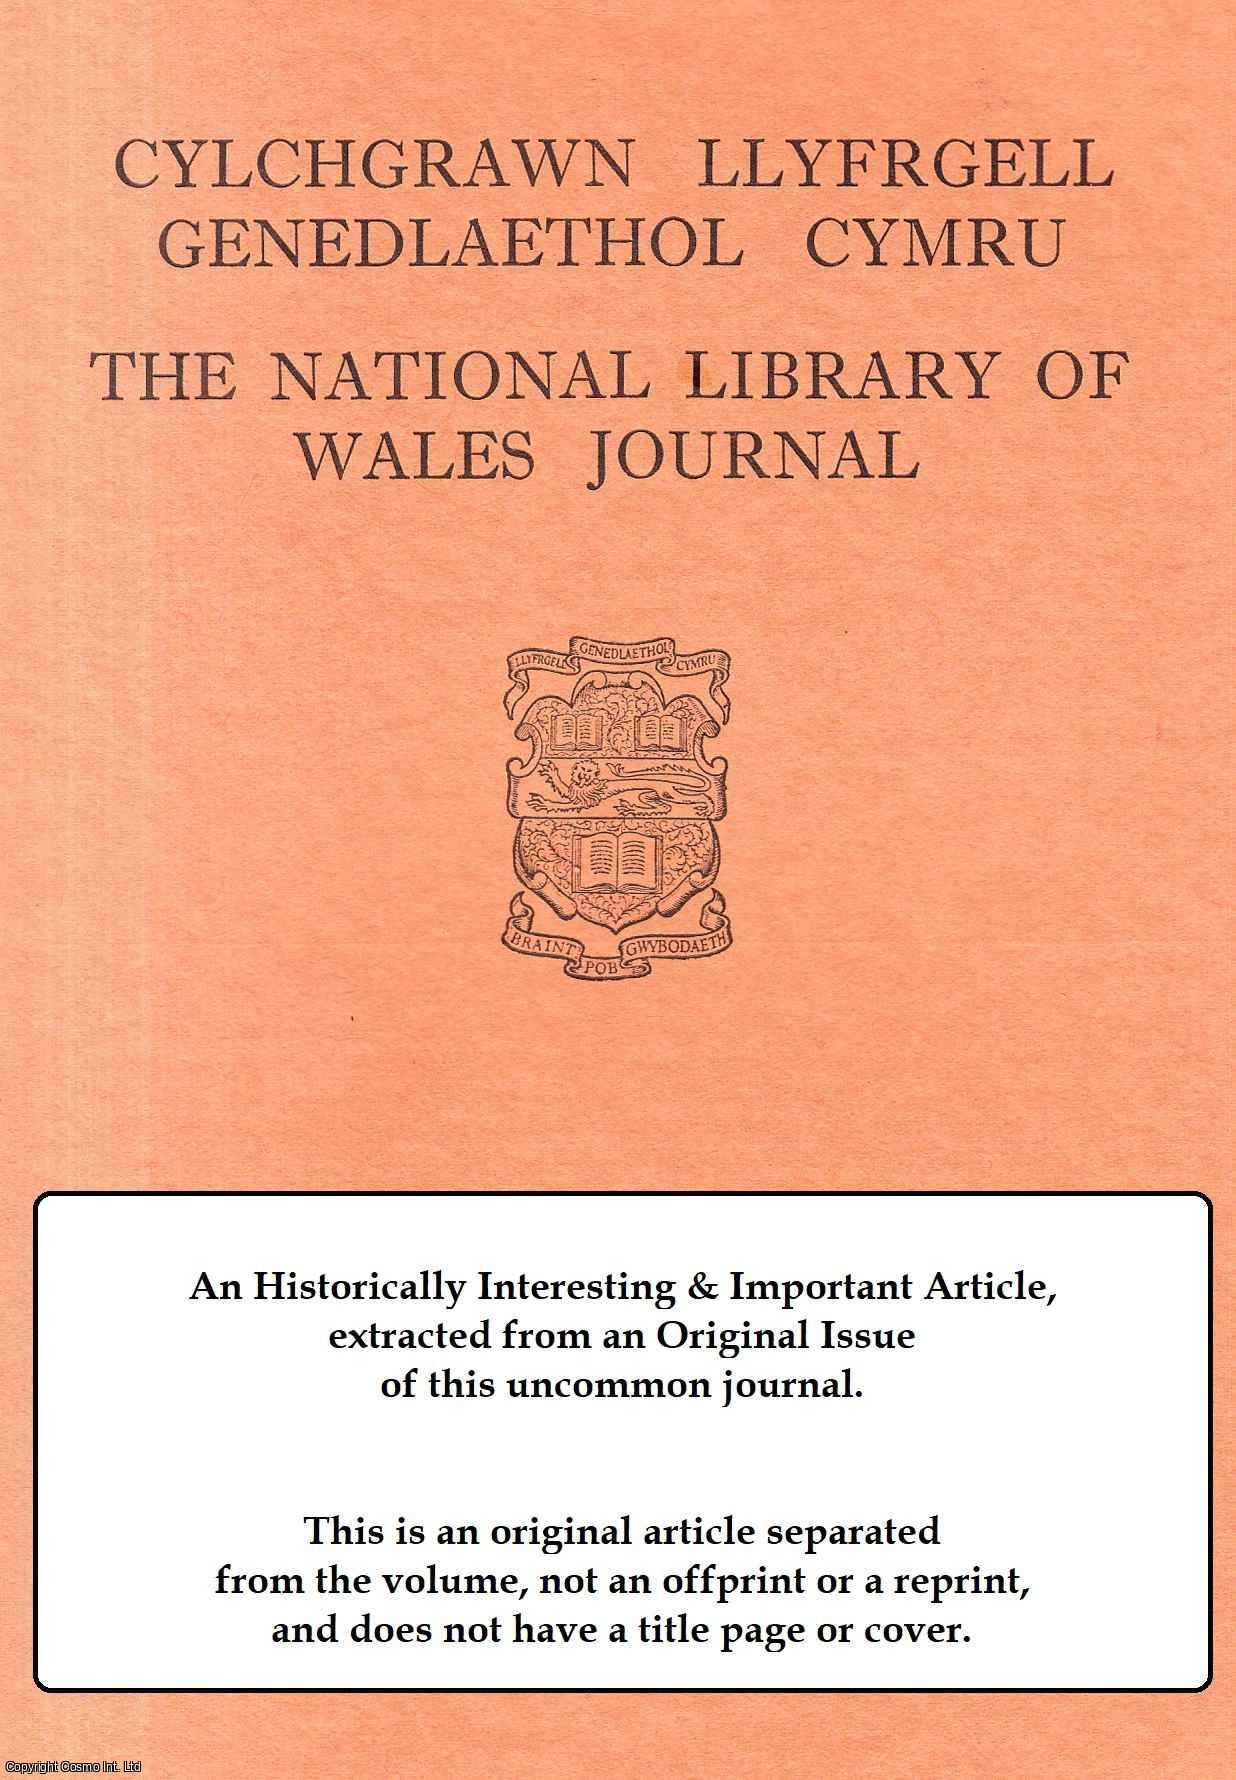 Peter C. Bartrum - Rhandiroedd Powys. An original article from The National Library of Wales Journal, 1973.